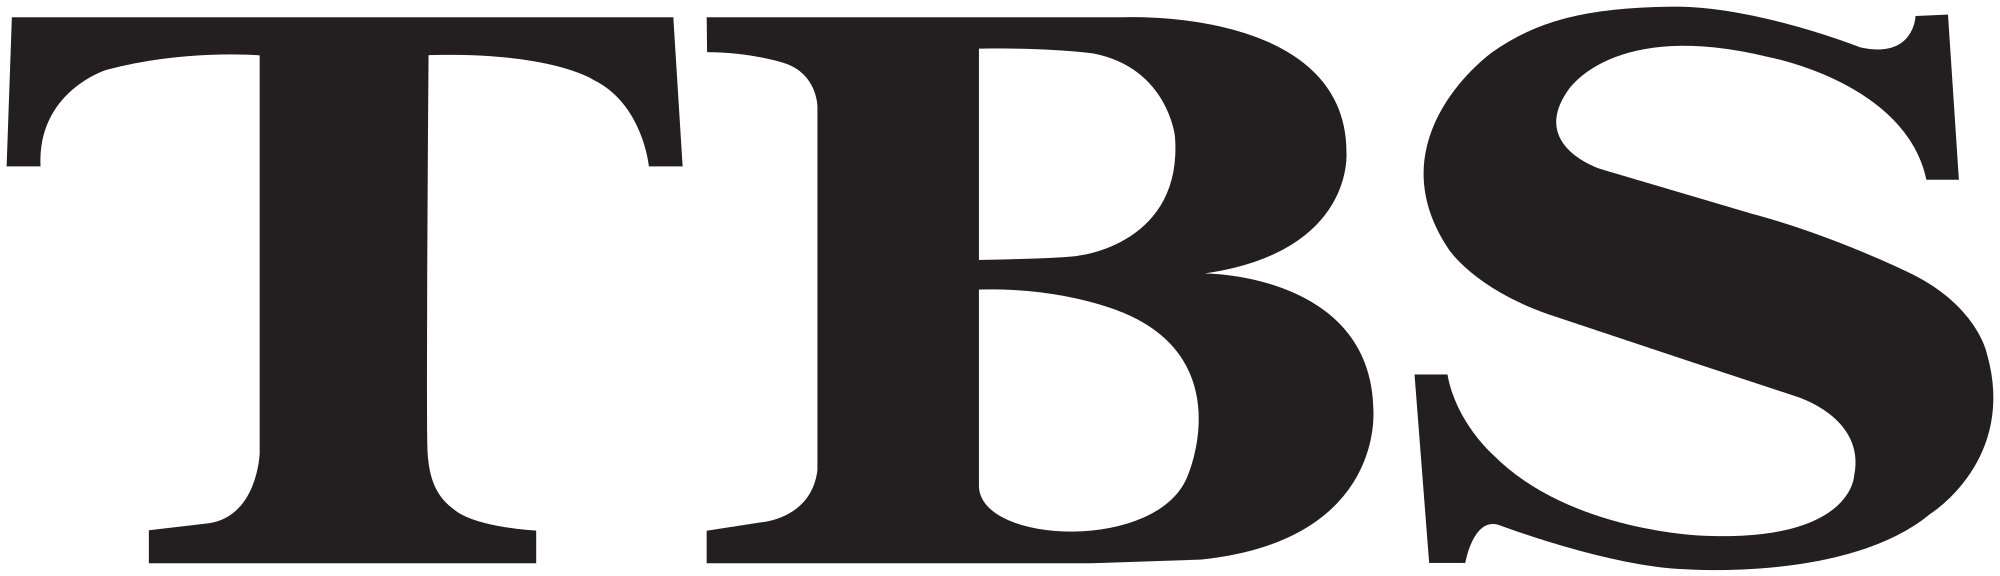 TBS Logo - TBS logo.svg